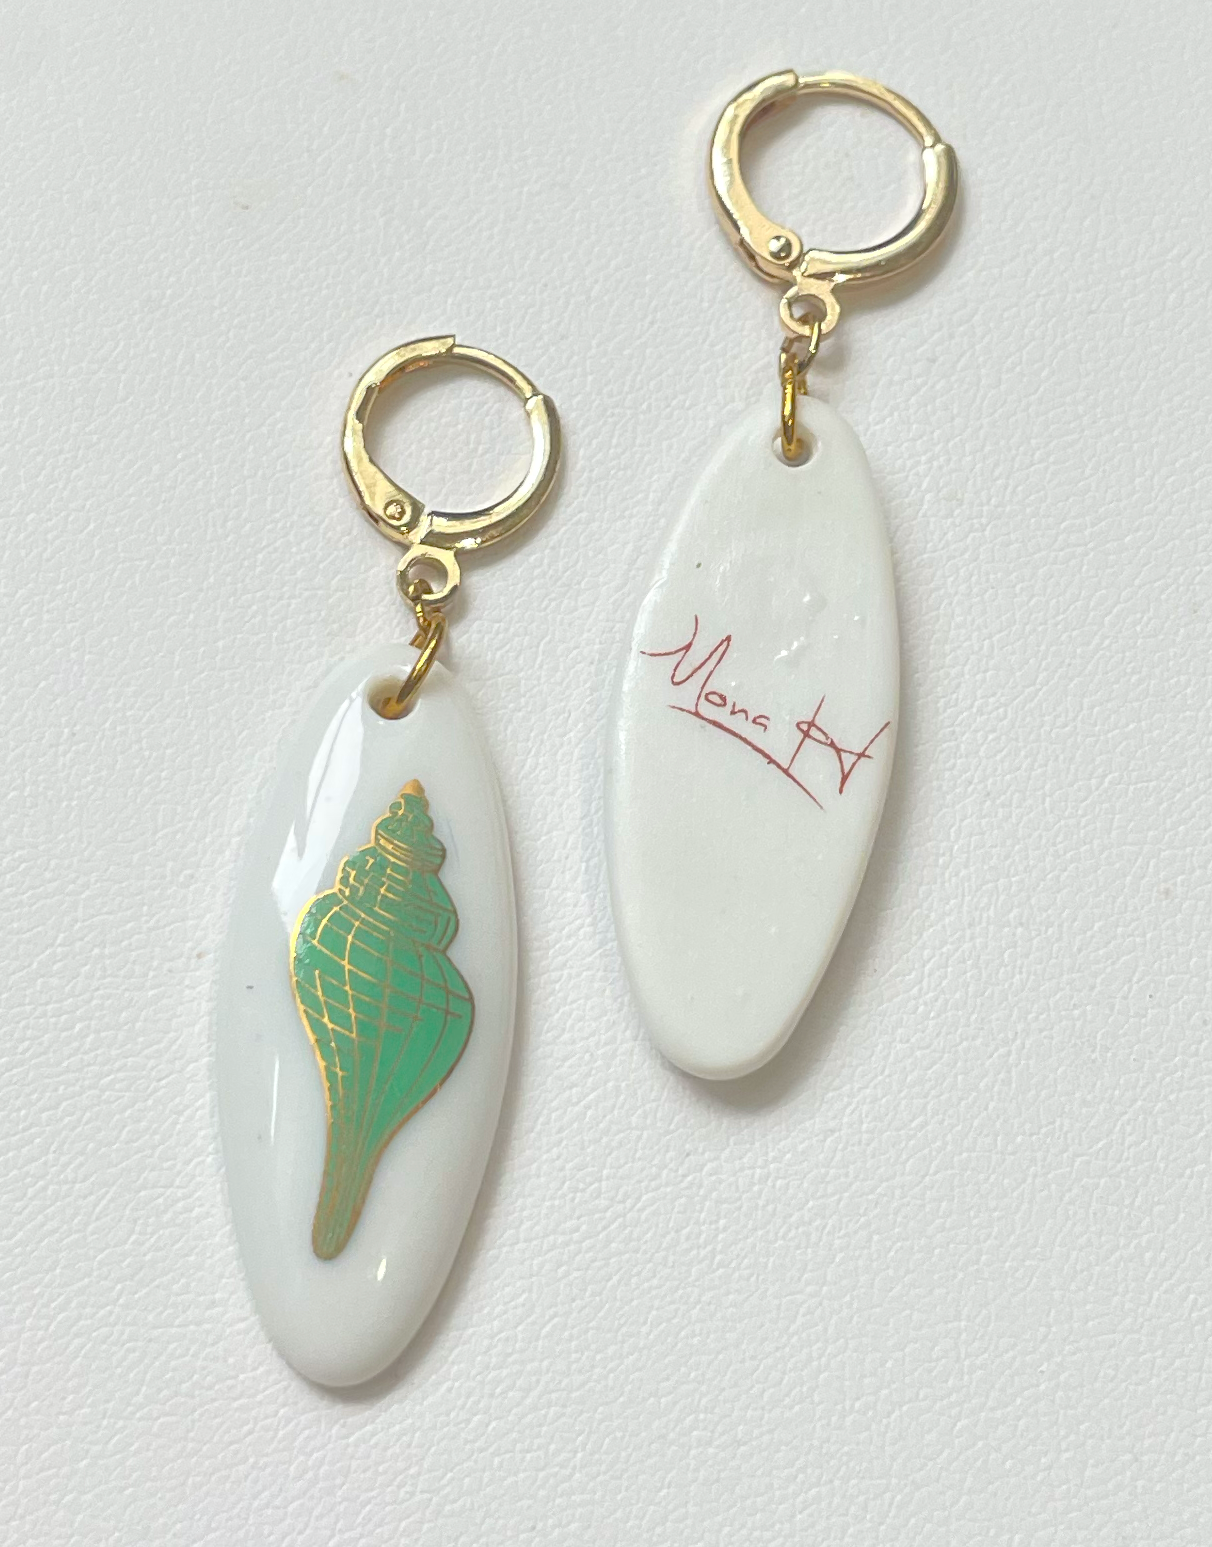 Green sea shell earrings